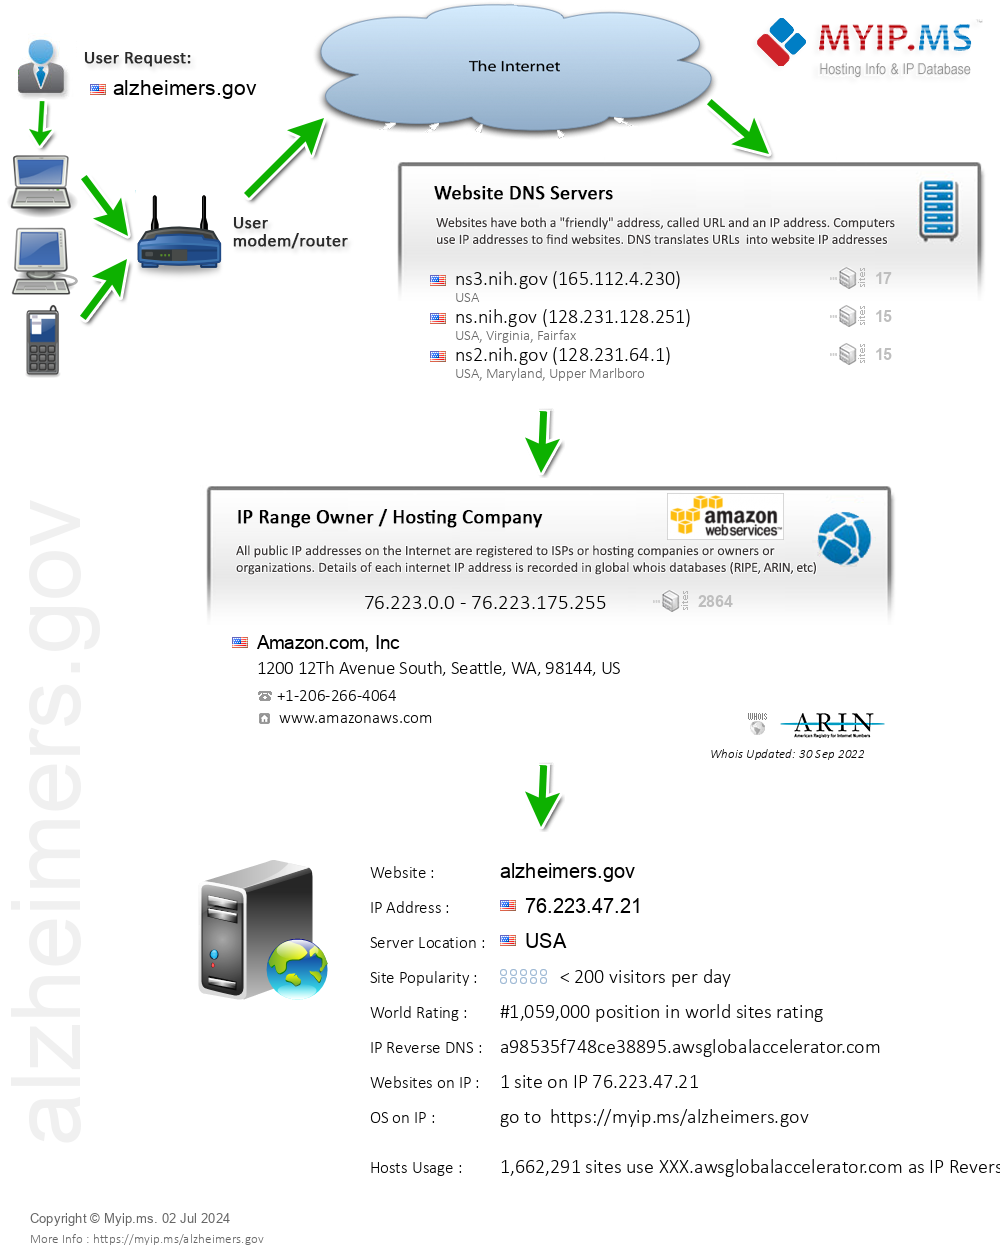 Alzheimers.gov - Website Hosting Visual IP Diagram